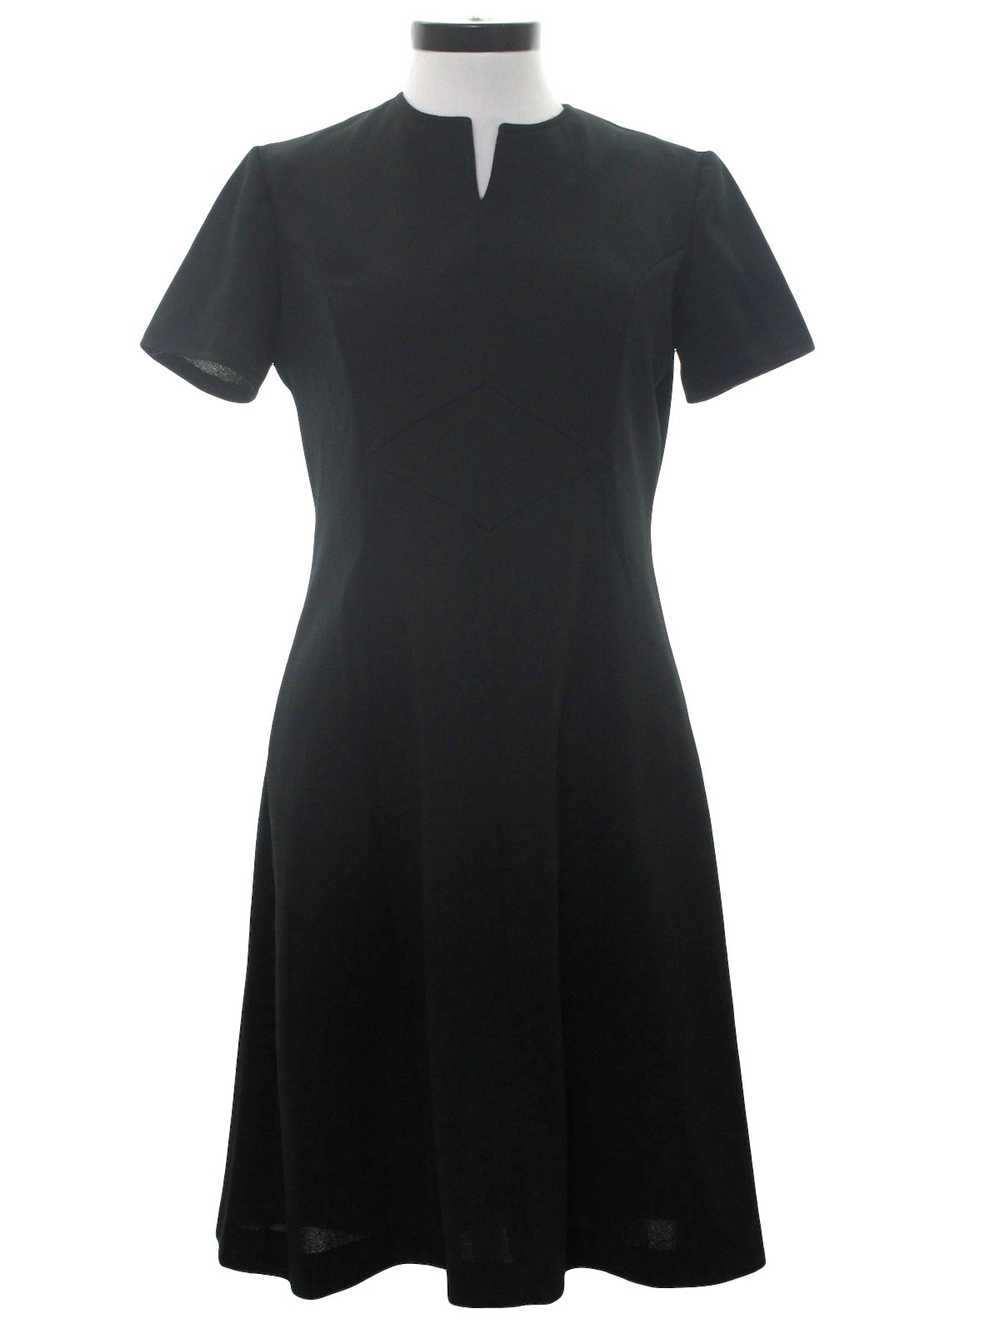 1960's Puritan Mod Knit Dress - image 1